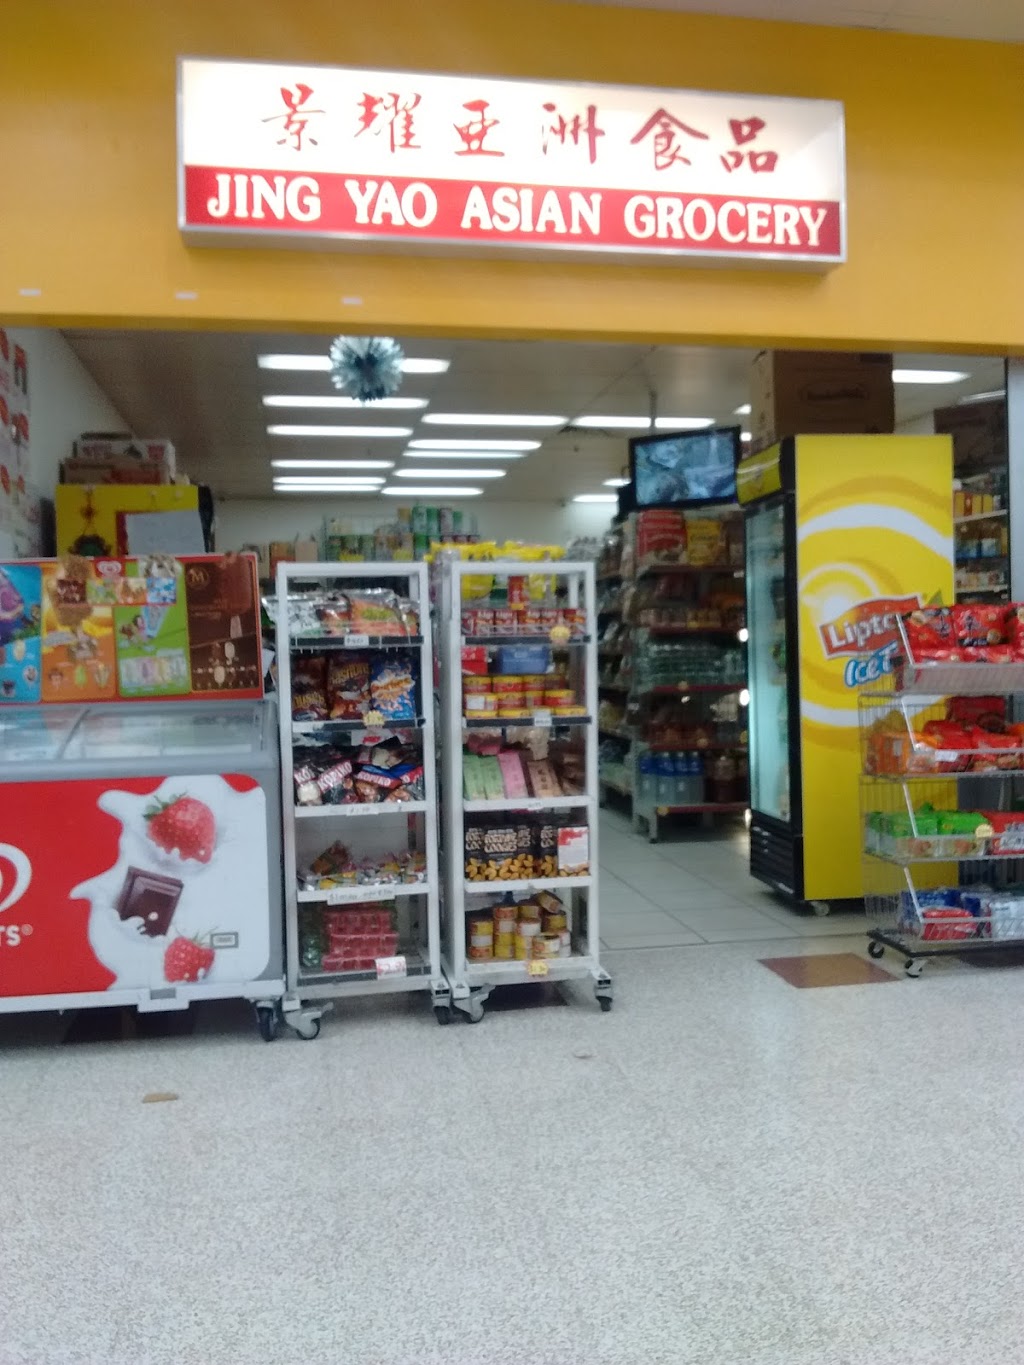 Jin Yao Asian Grocery | 265A Belmore Rd, Riverwood NSW 2210, Australia | Phone: (02) 9584 8248